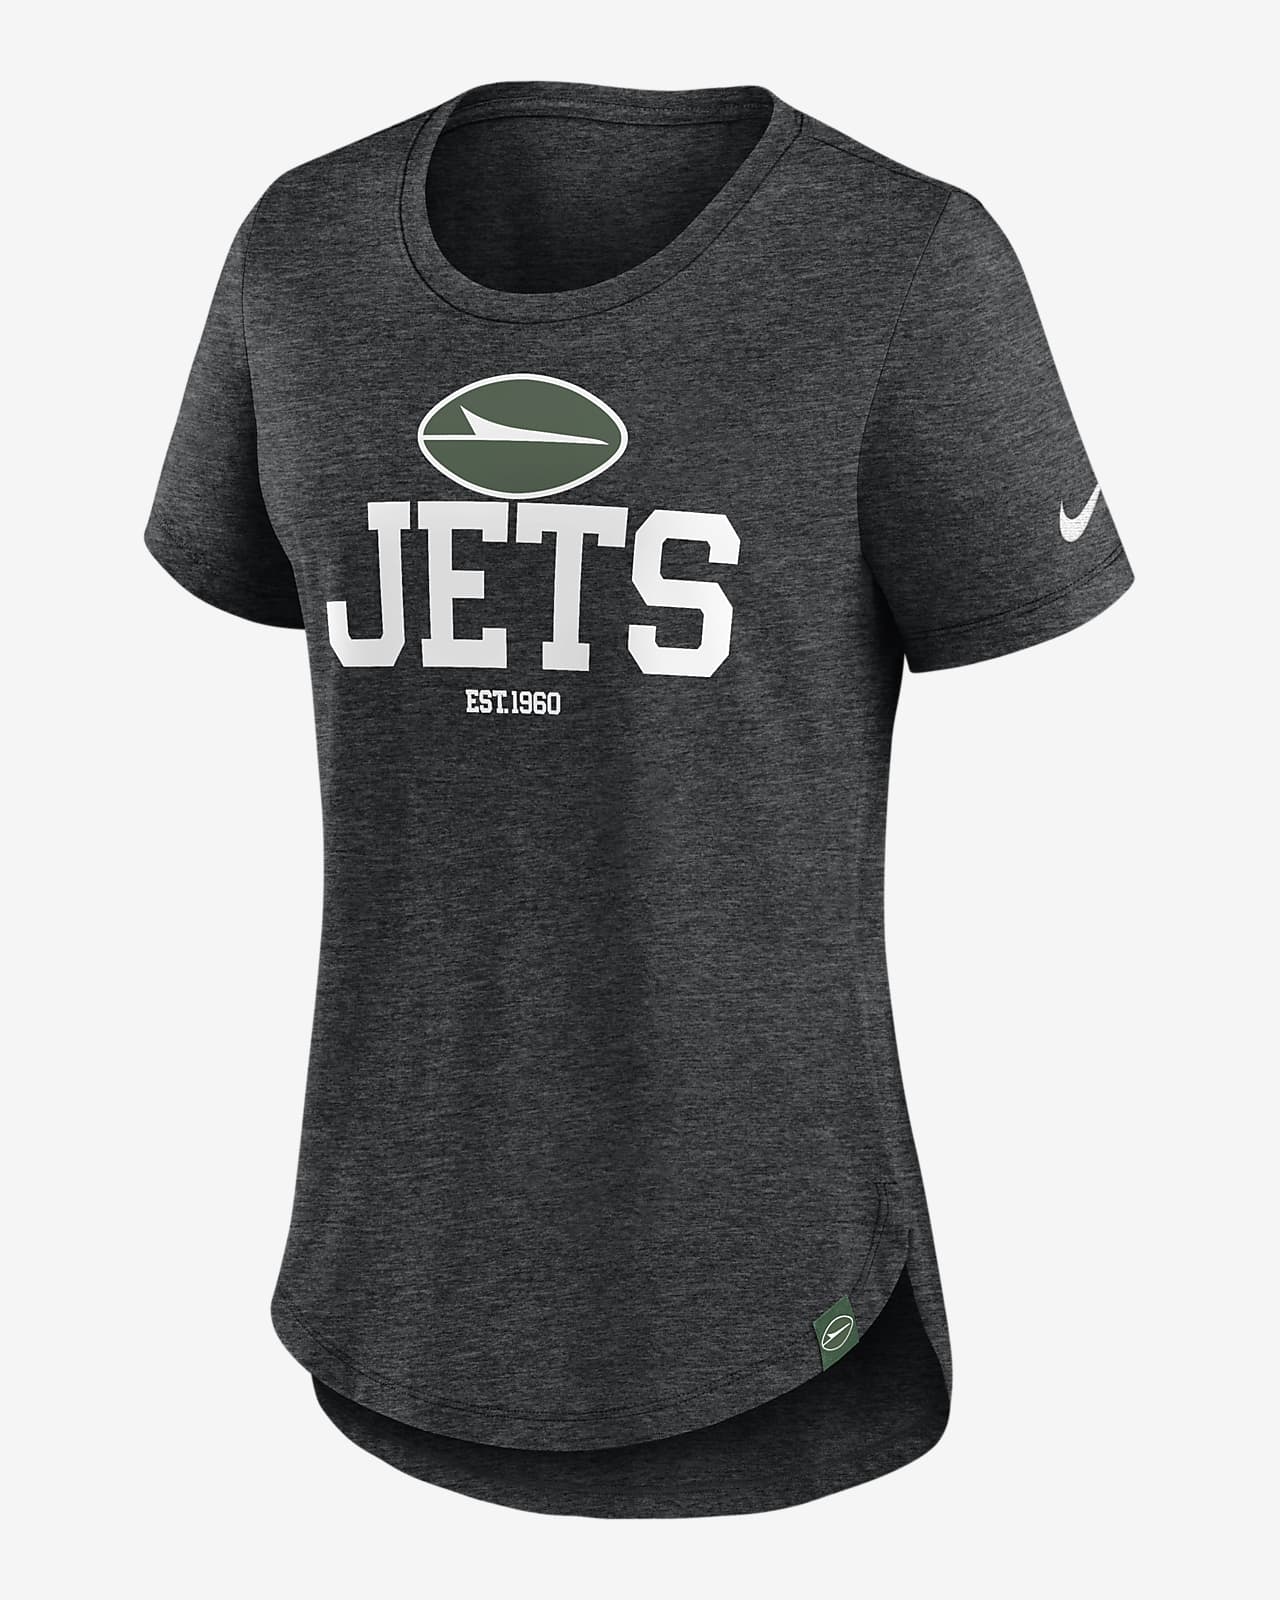 Playera Nike de la NFL para mujer New York Jets